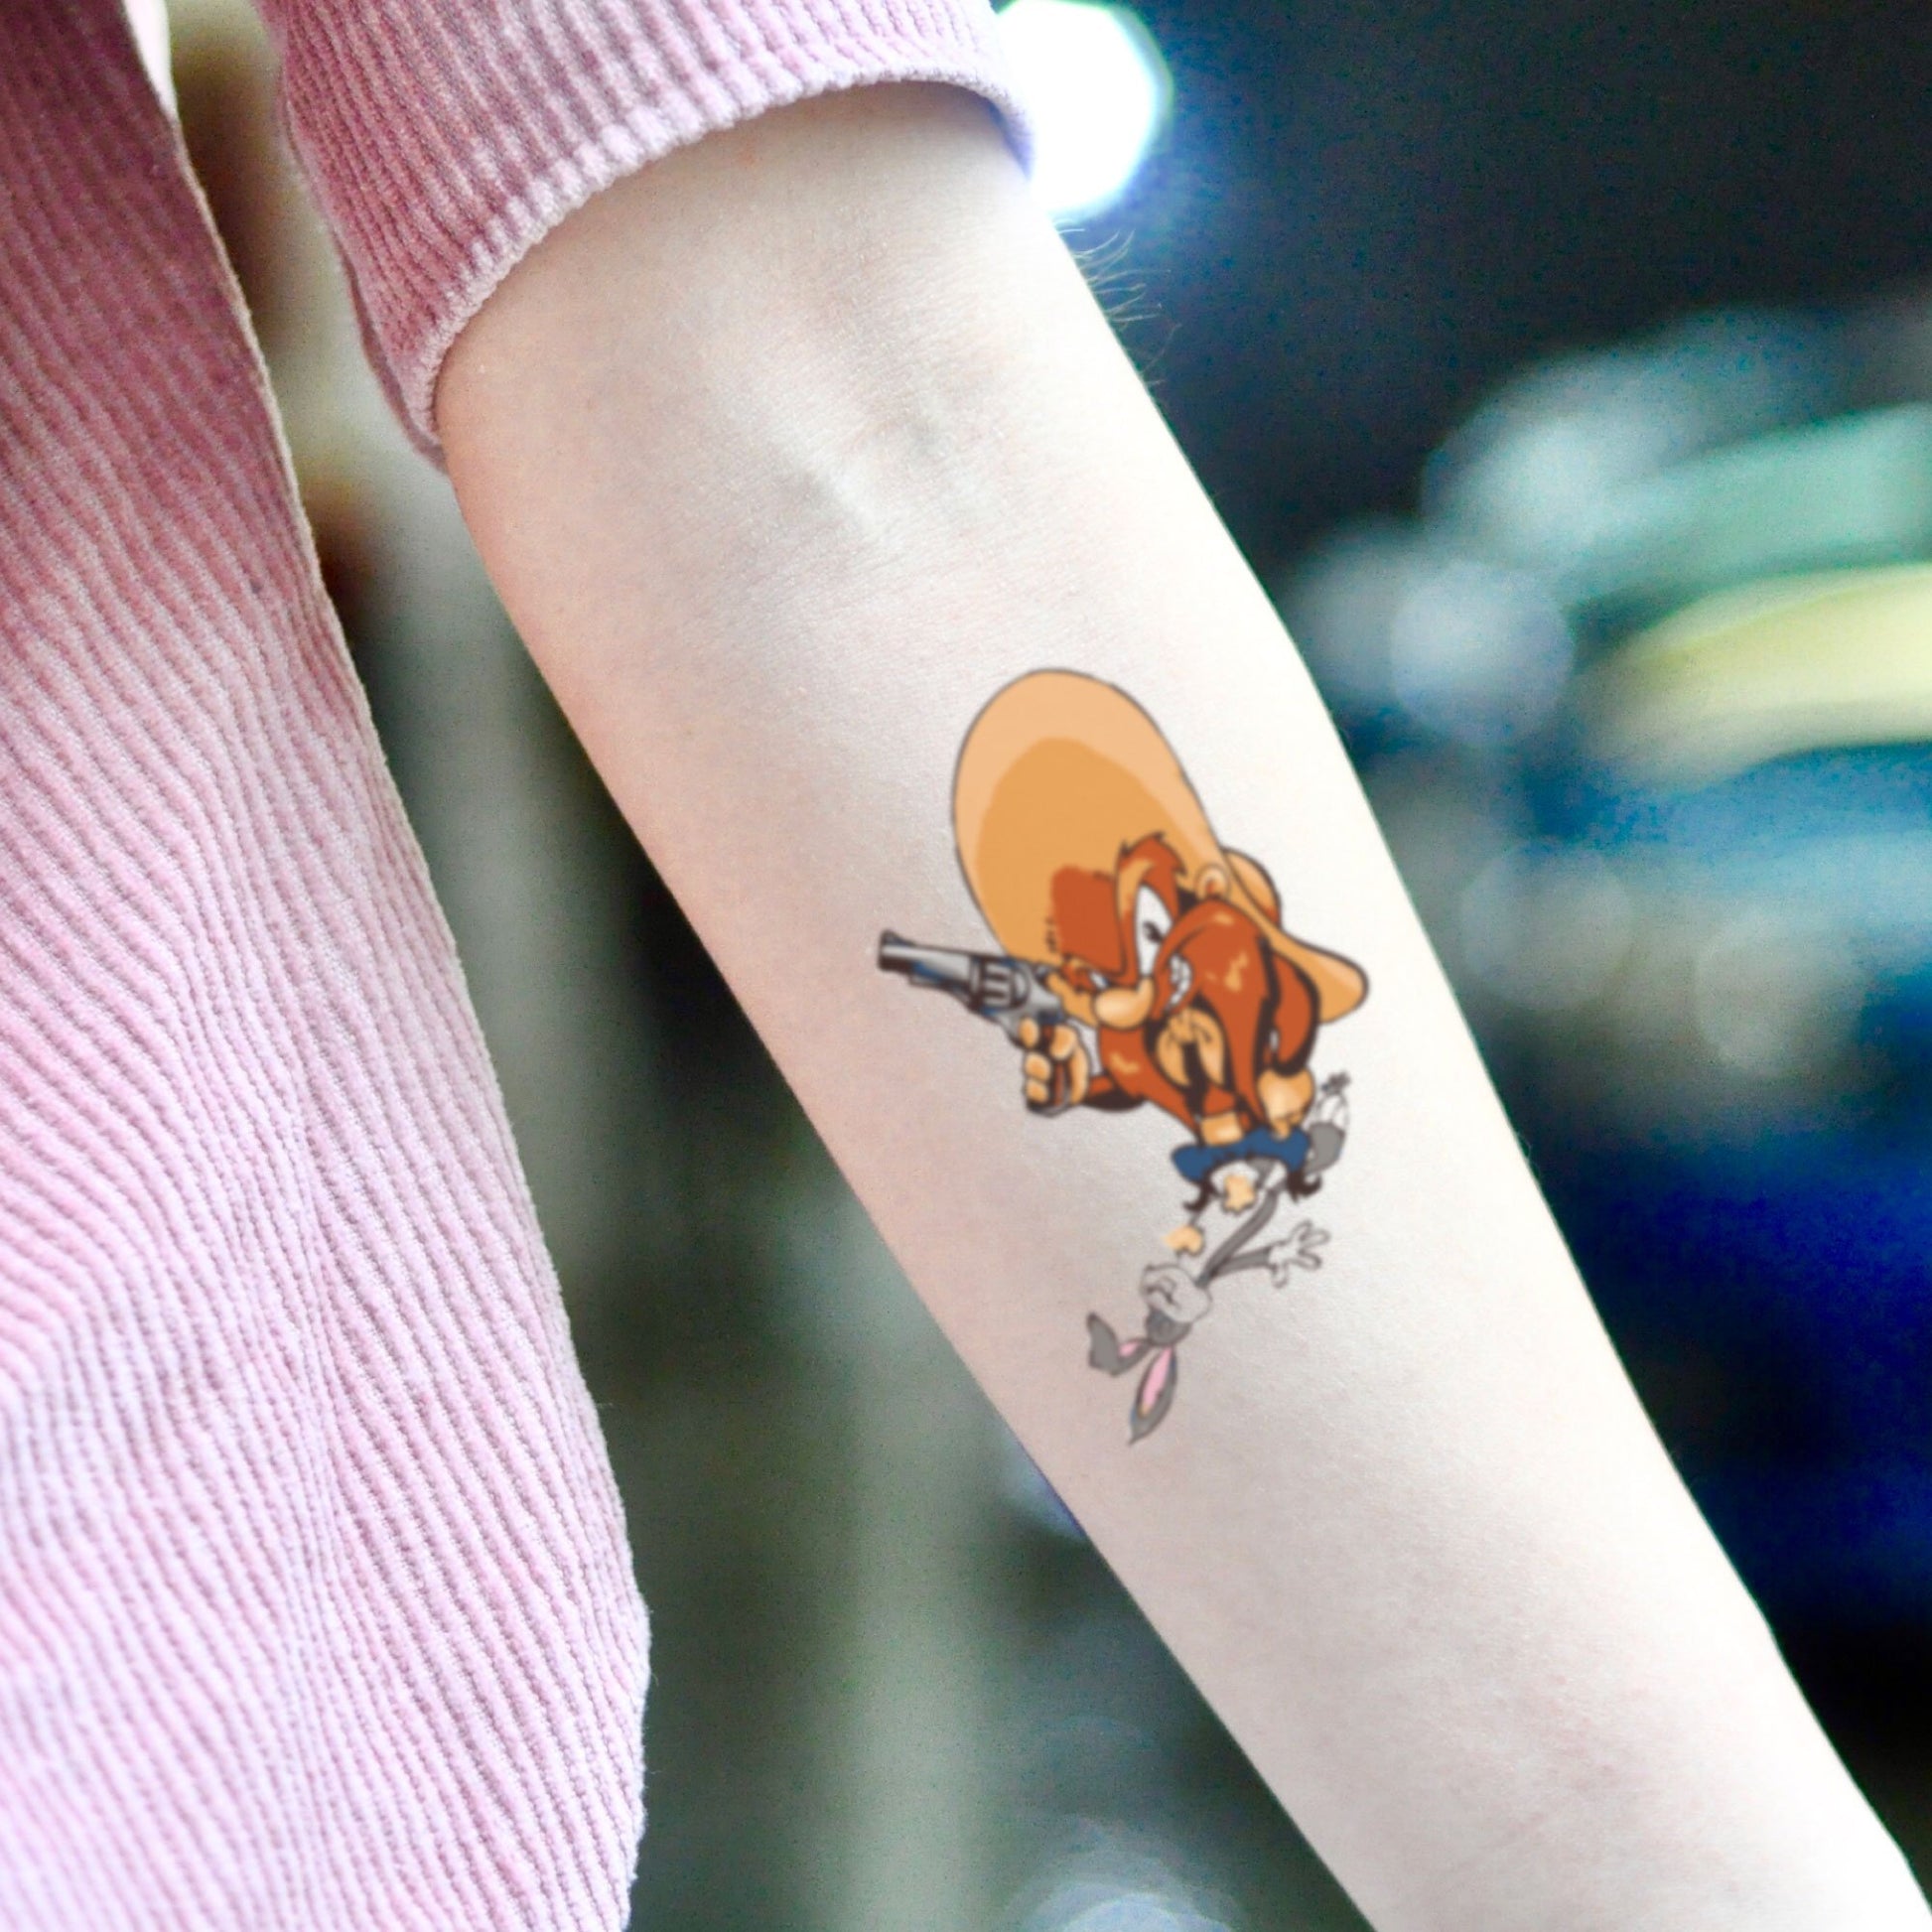 fake small yosemite sam yosemity looney toons cartoon temporary tattoo sticker design idea on inner arm